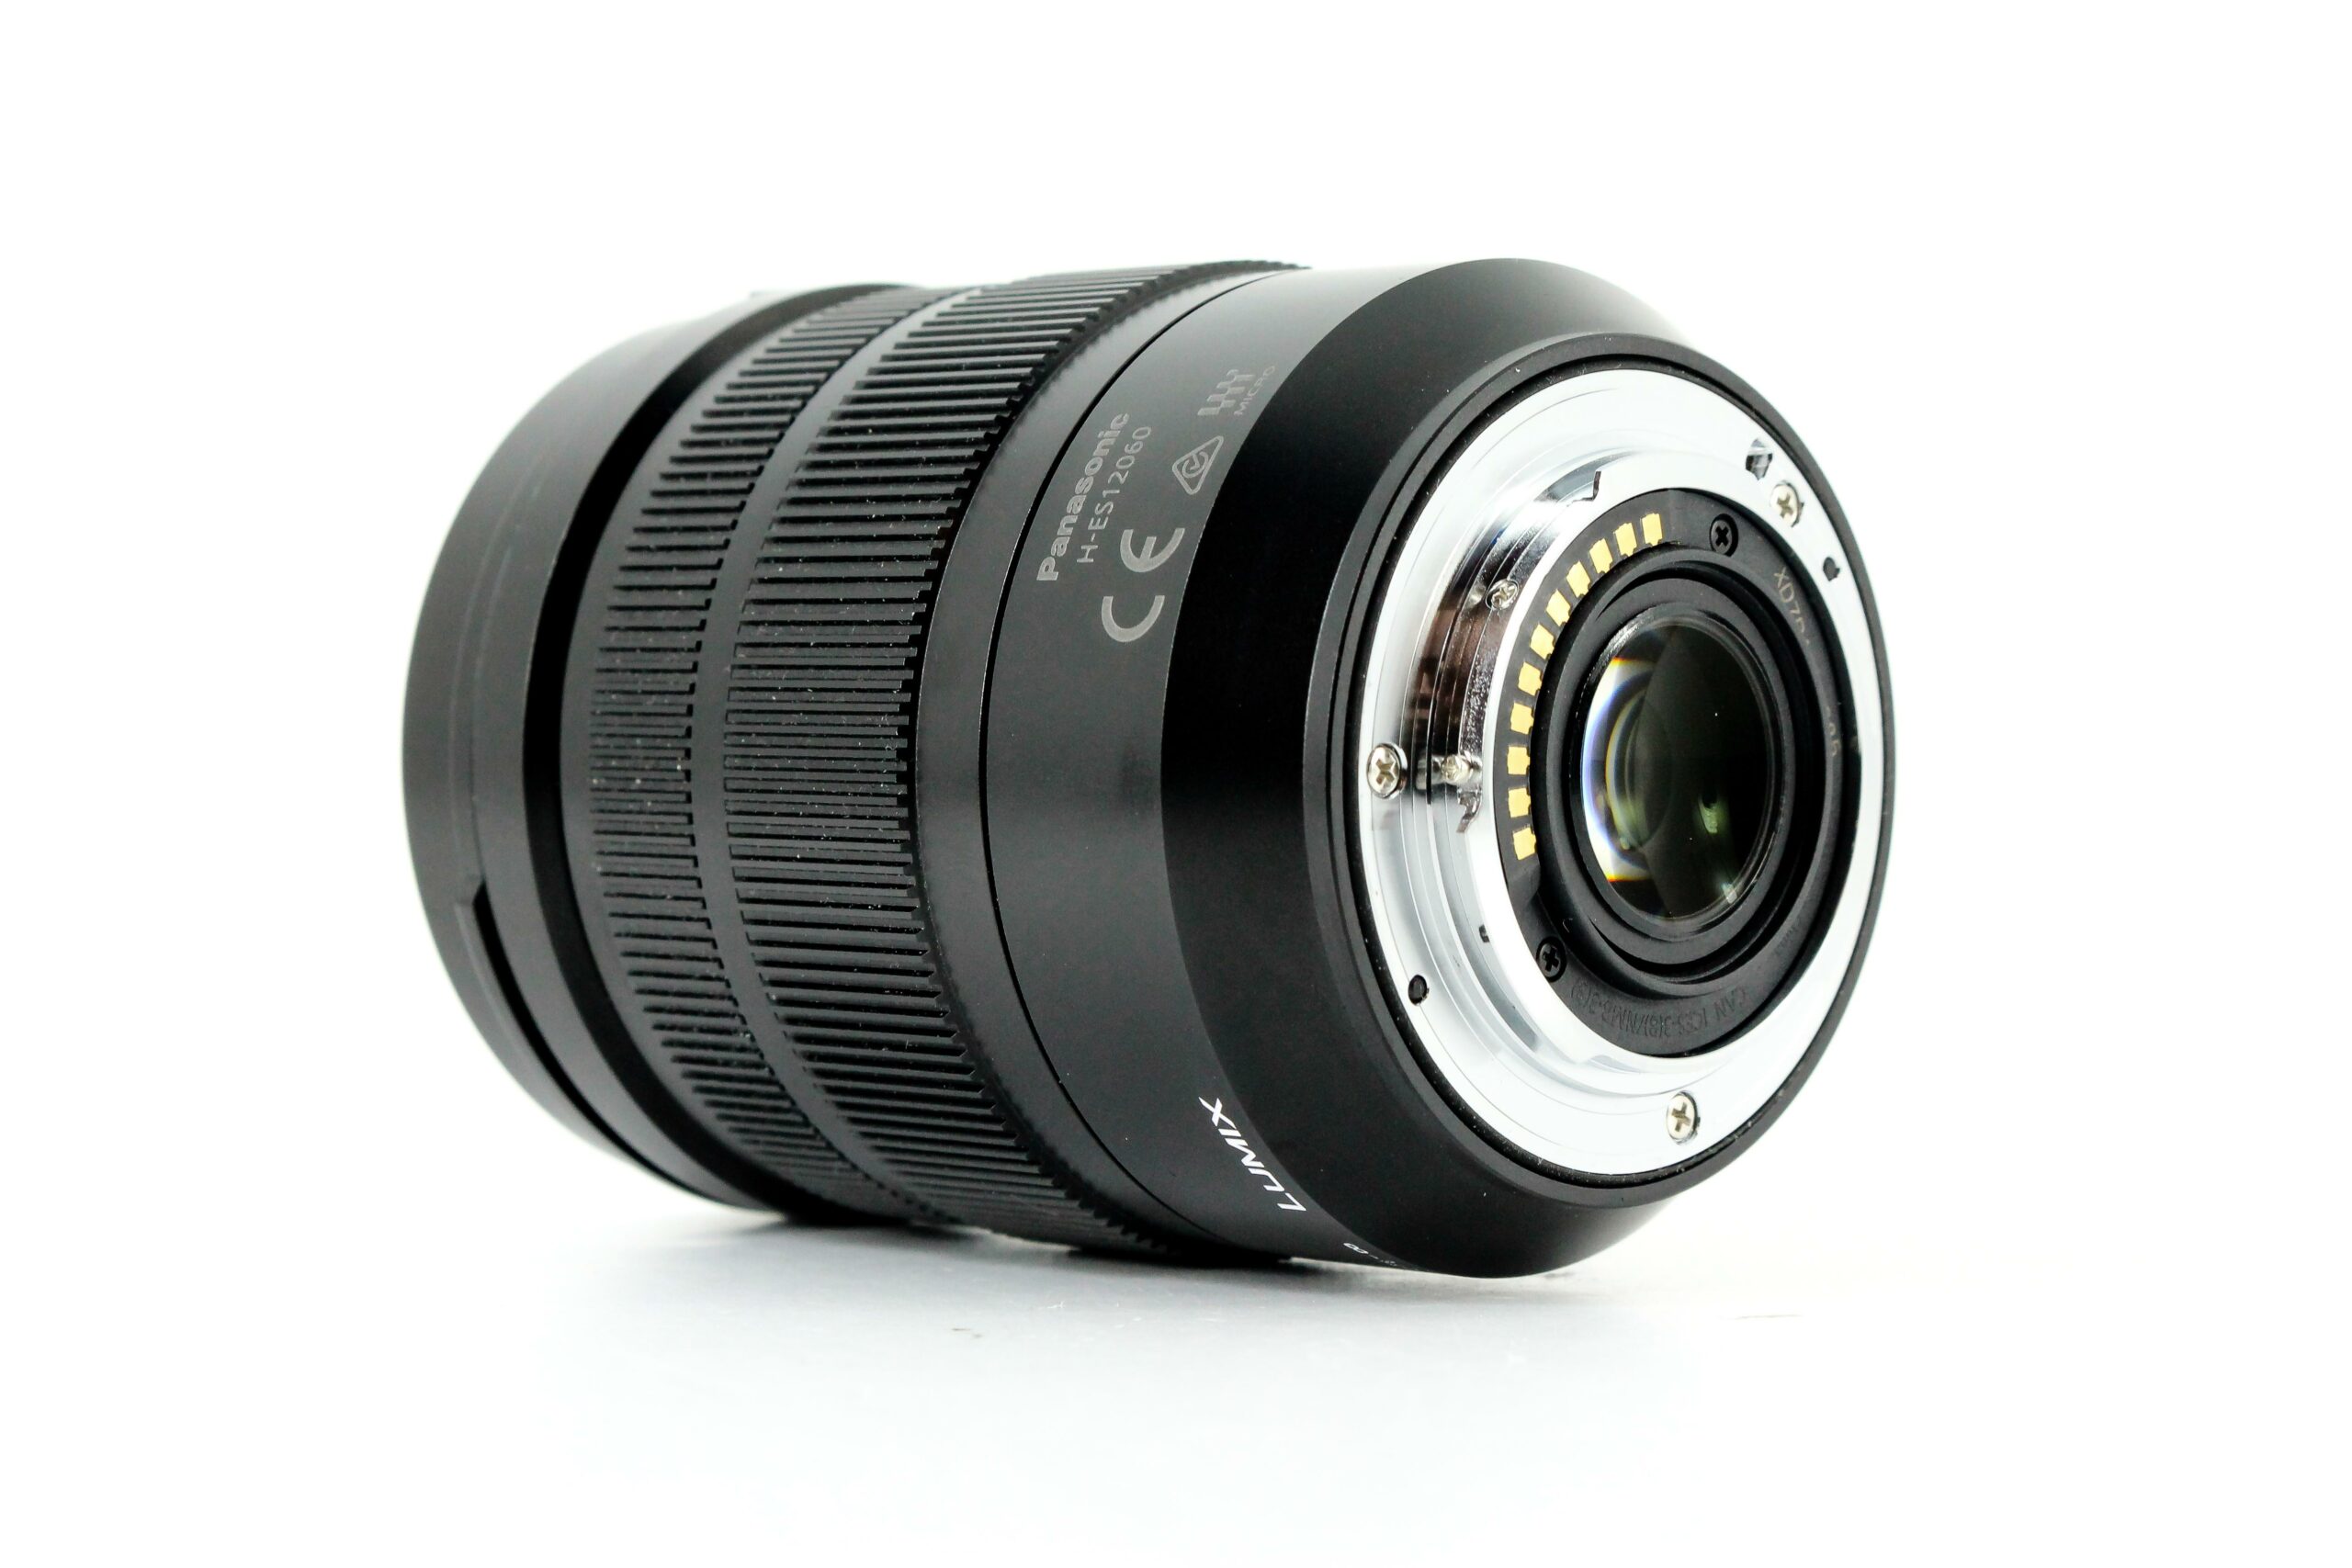 Panasonic Leica DG Vario-Elmarit 12-60mm f2.8-4.0 ASPH Power OIS Lens